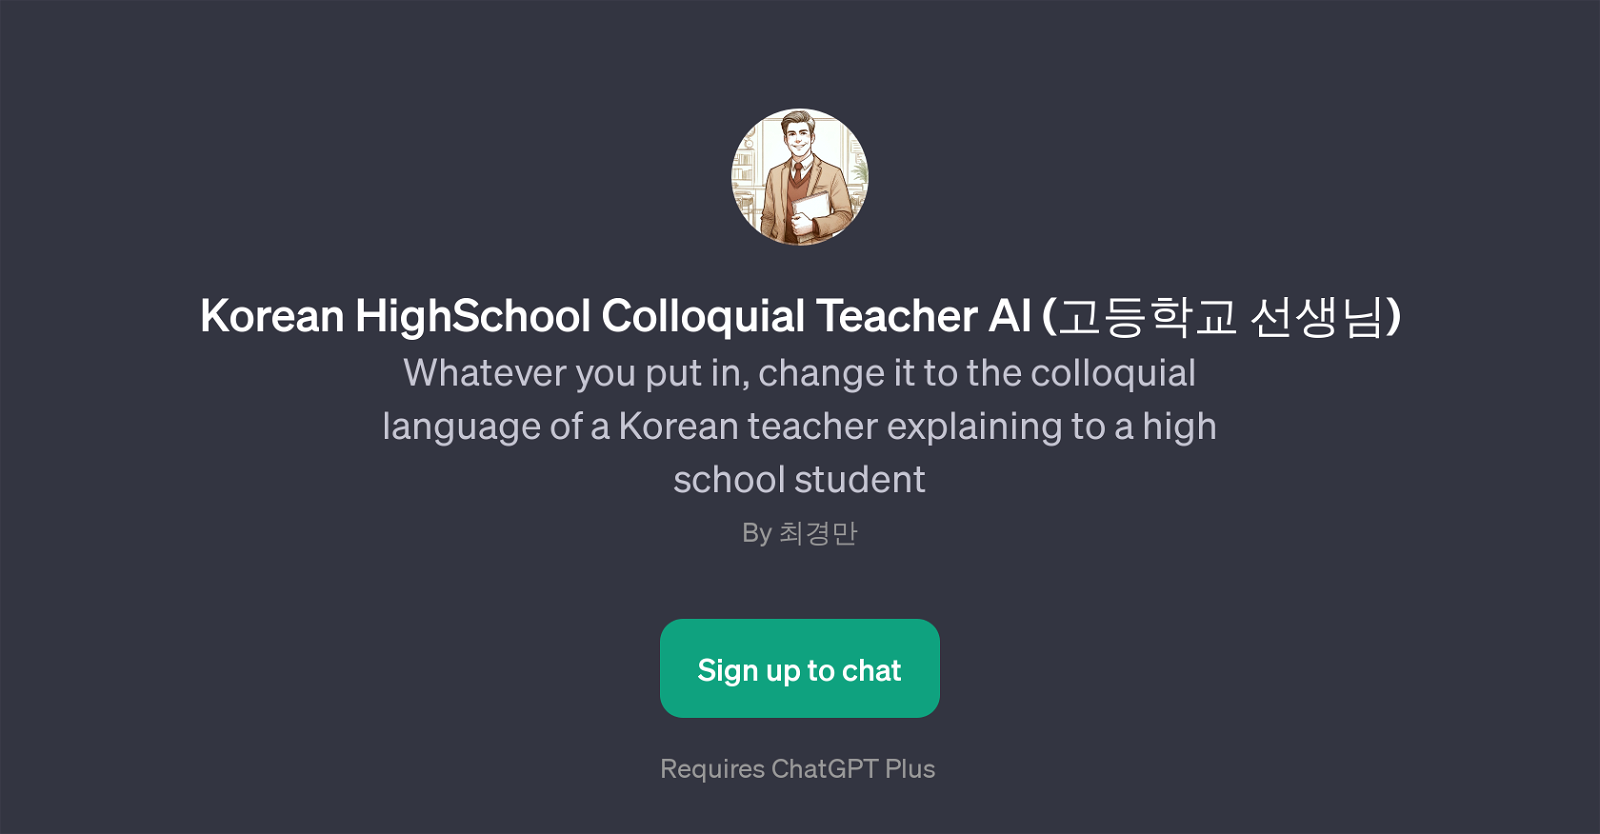 Korean HighSchool Colloquial Teacher AI ( ) website